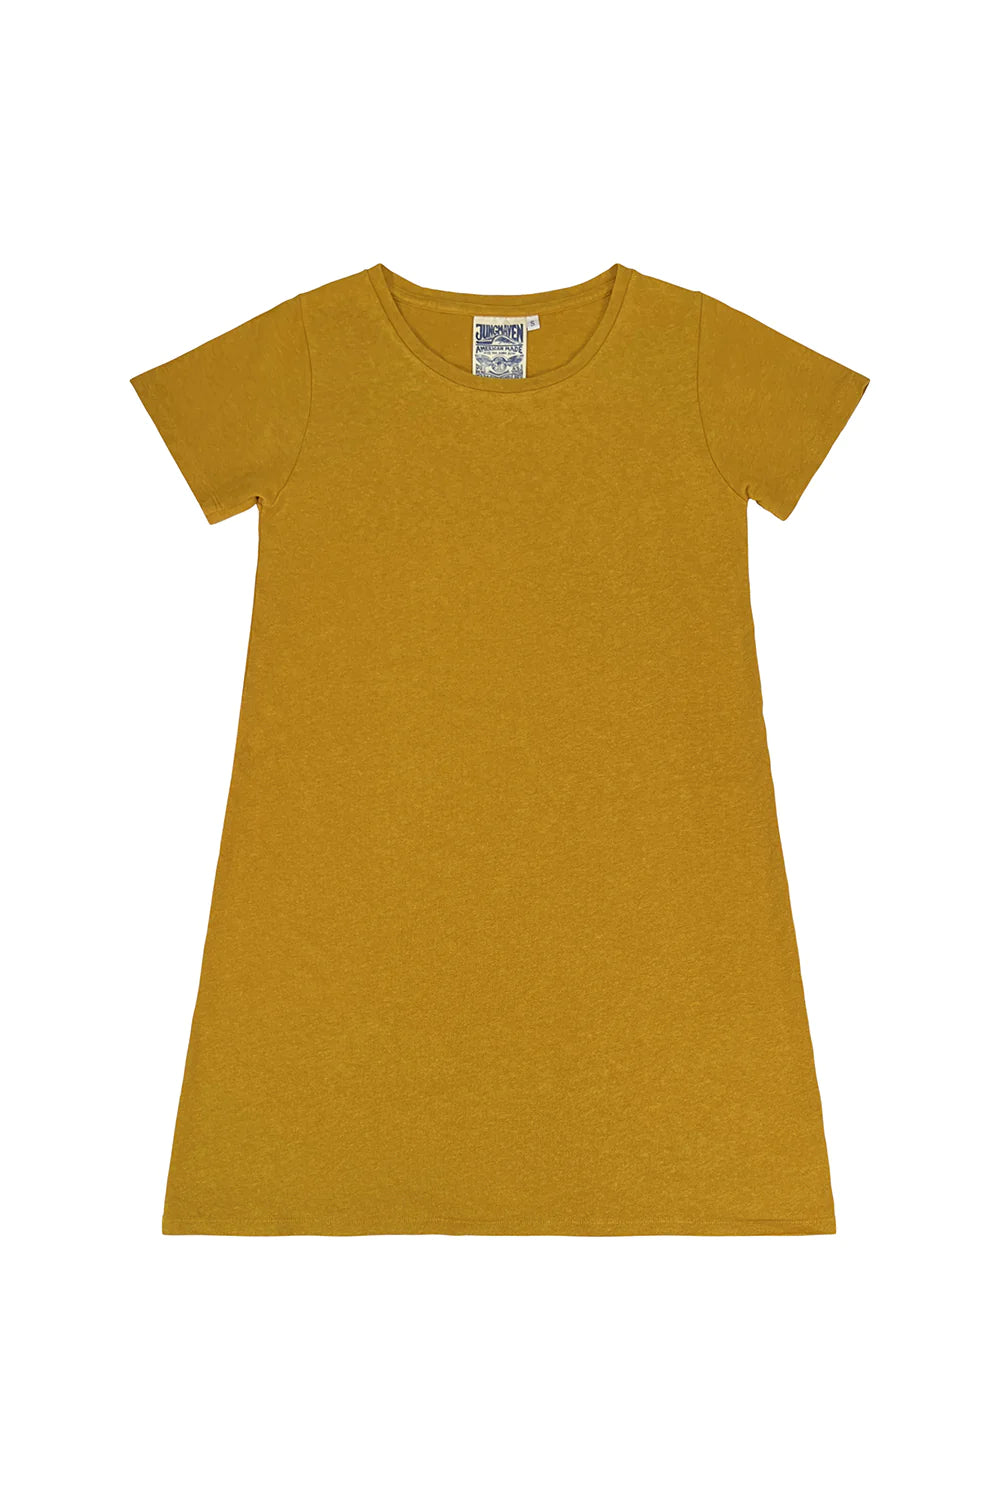 Jungmaven | Rae Line T-Shirt Dress - Mustard Yellow